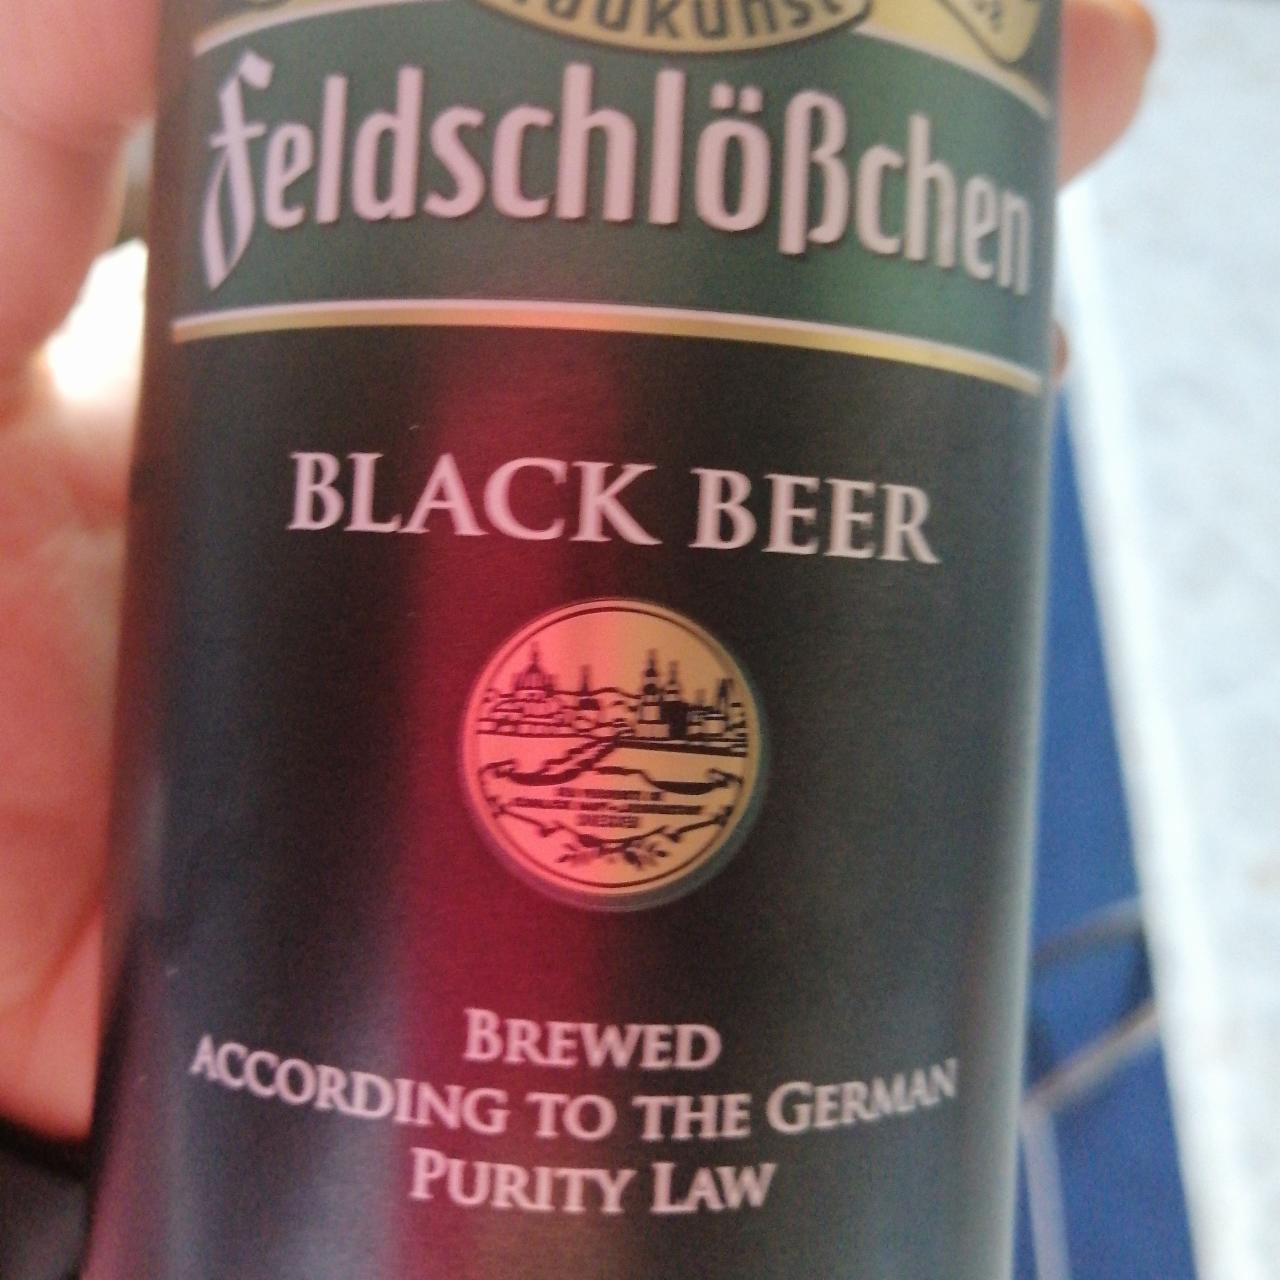 Фото - Пиво темное Feldschlossechen